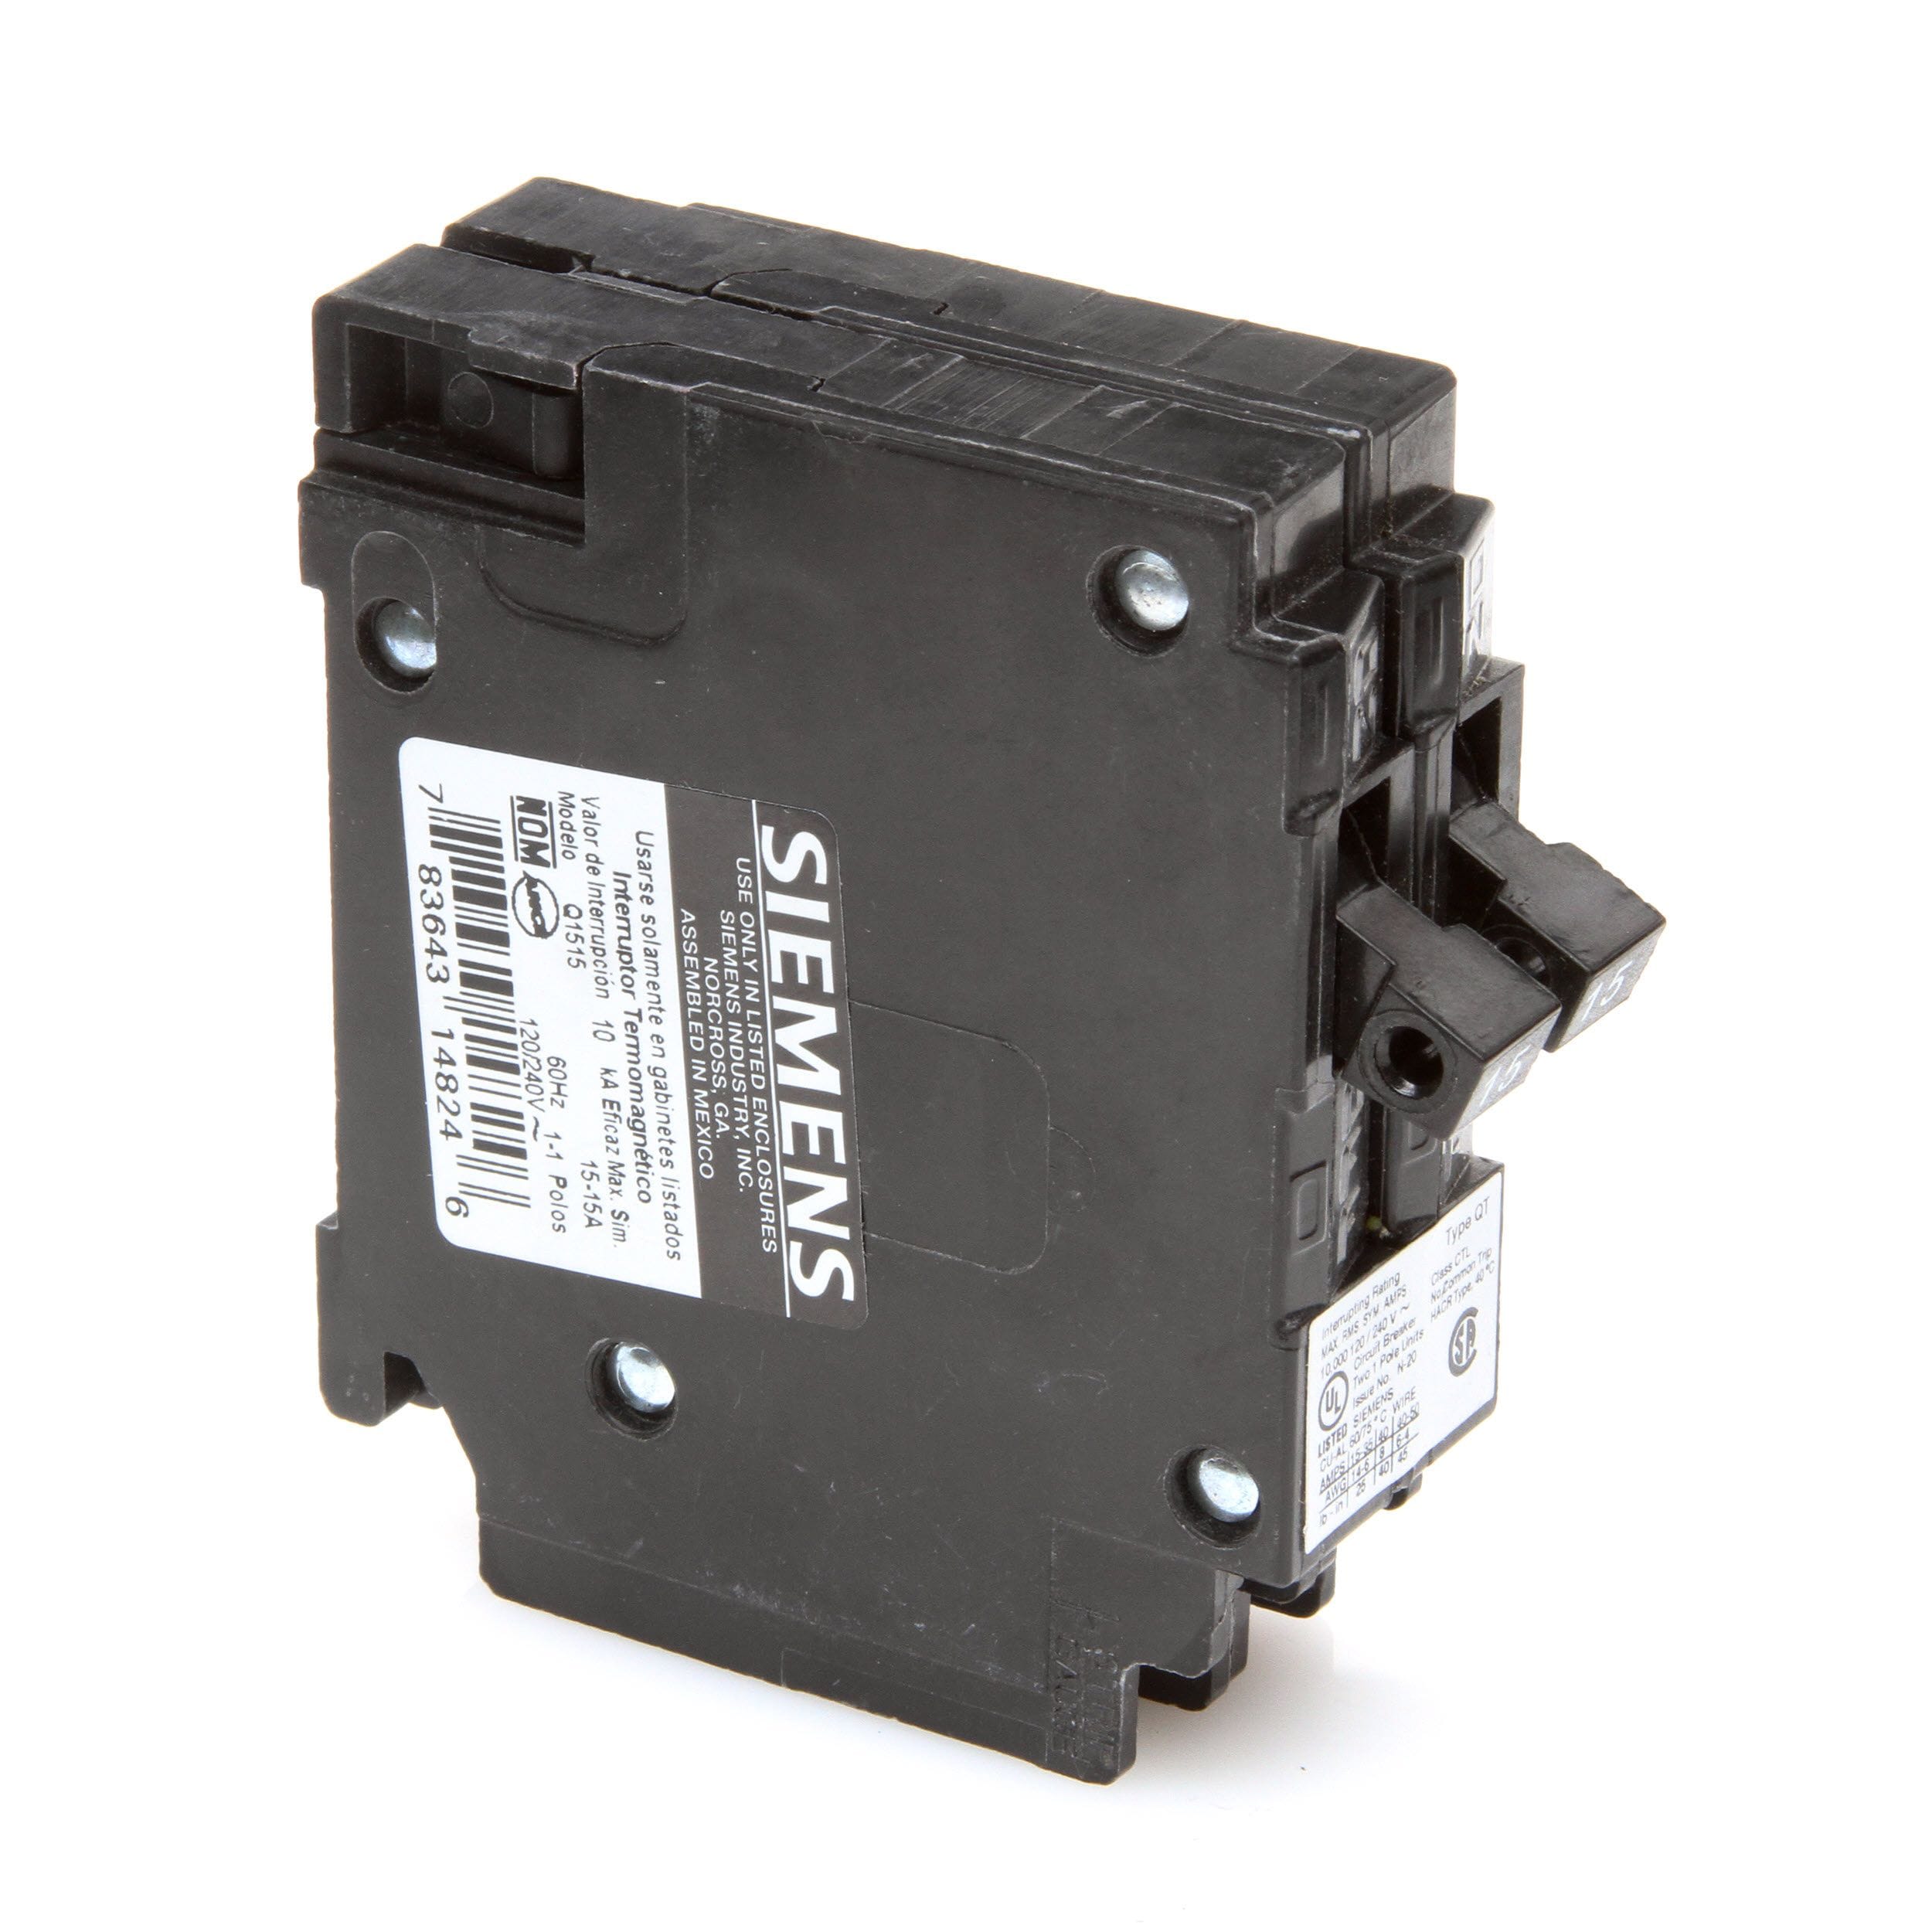 Siemens 15A Amp 1P Pole Q115 Circuit Breaker Save on 2+ New Open Box 